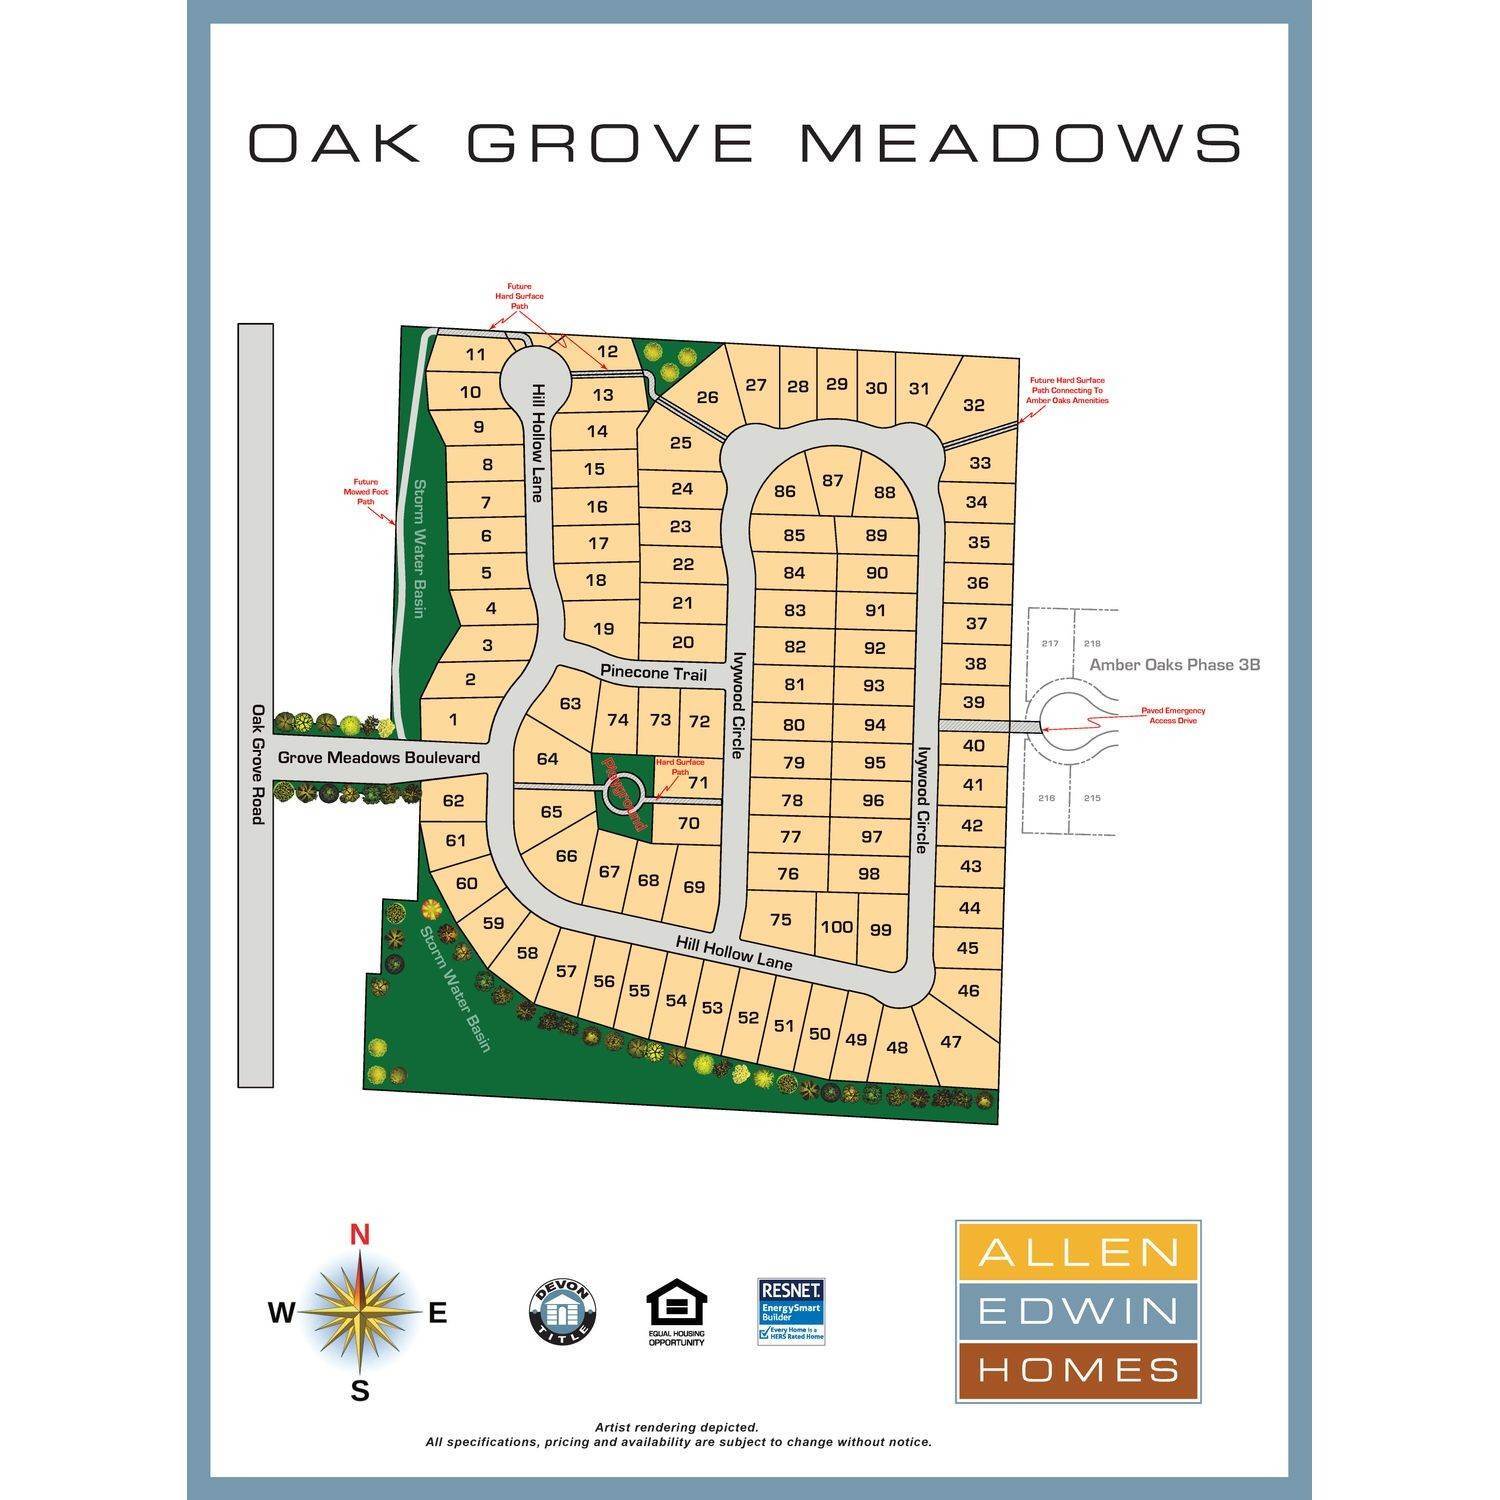 2. Oak Grove Meadows xây dựng tại 3260 Hill Hollow Lane, Howell, MI 48855